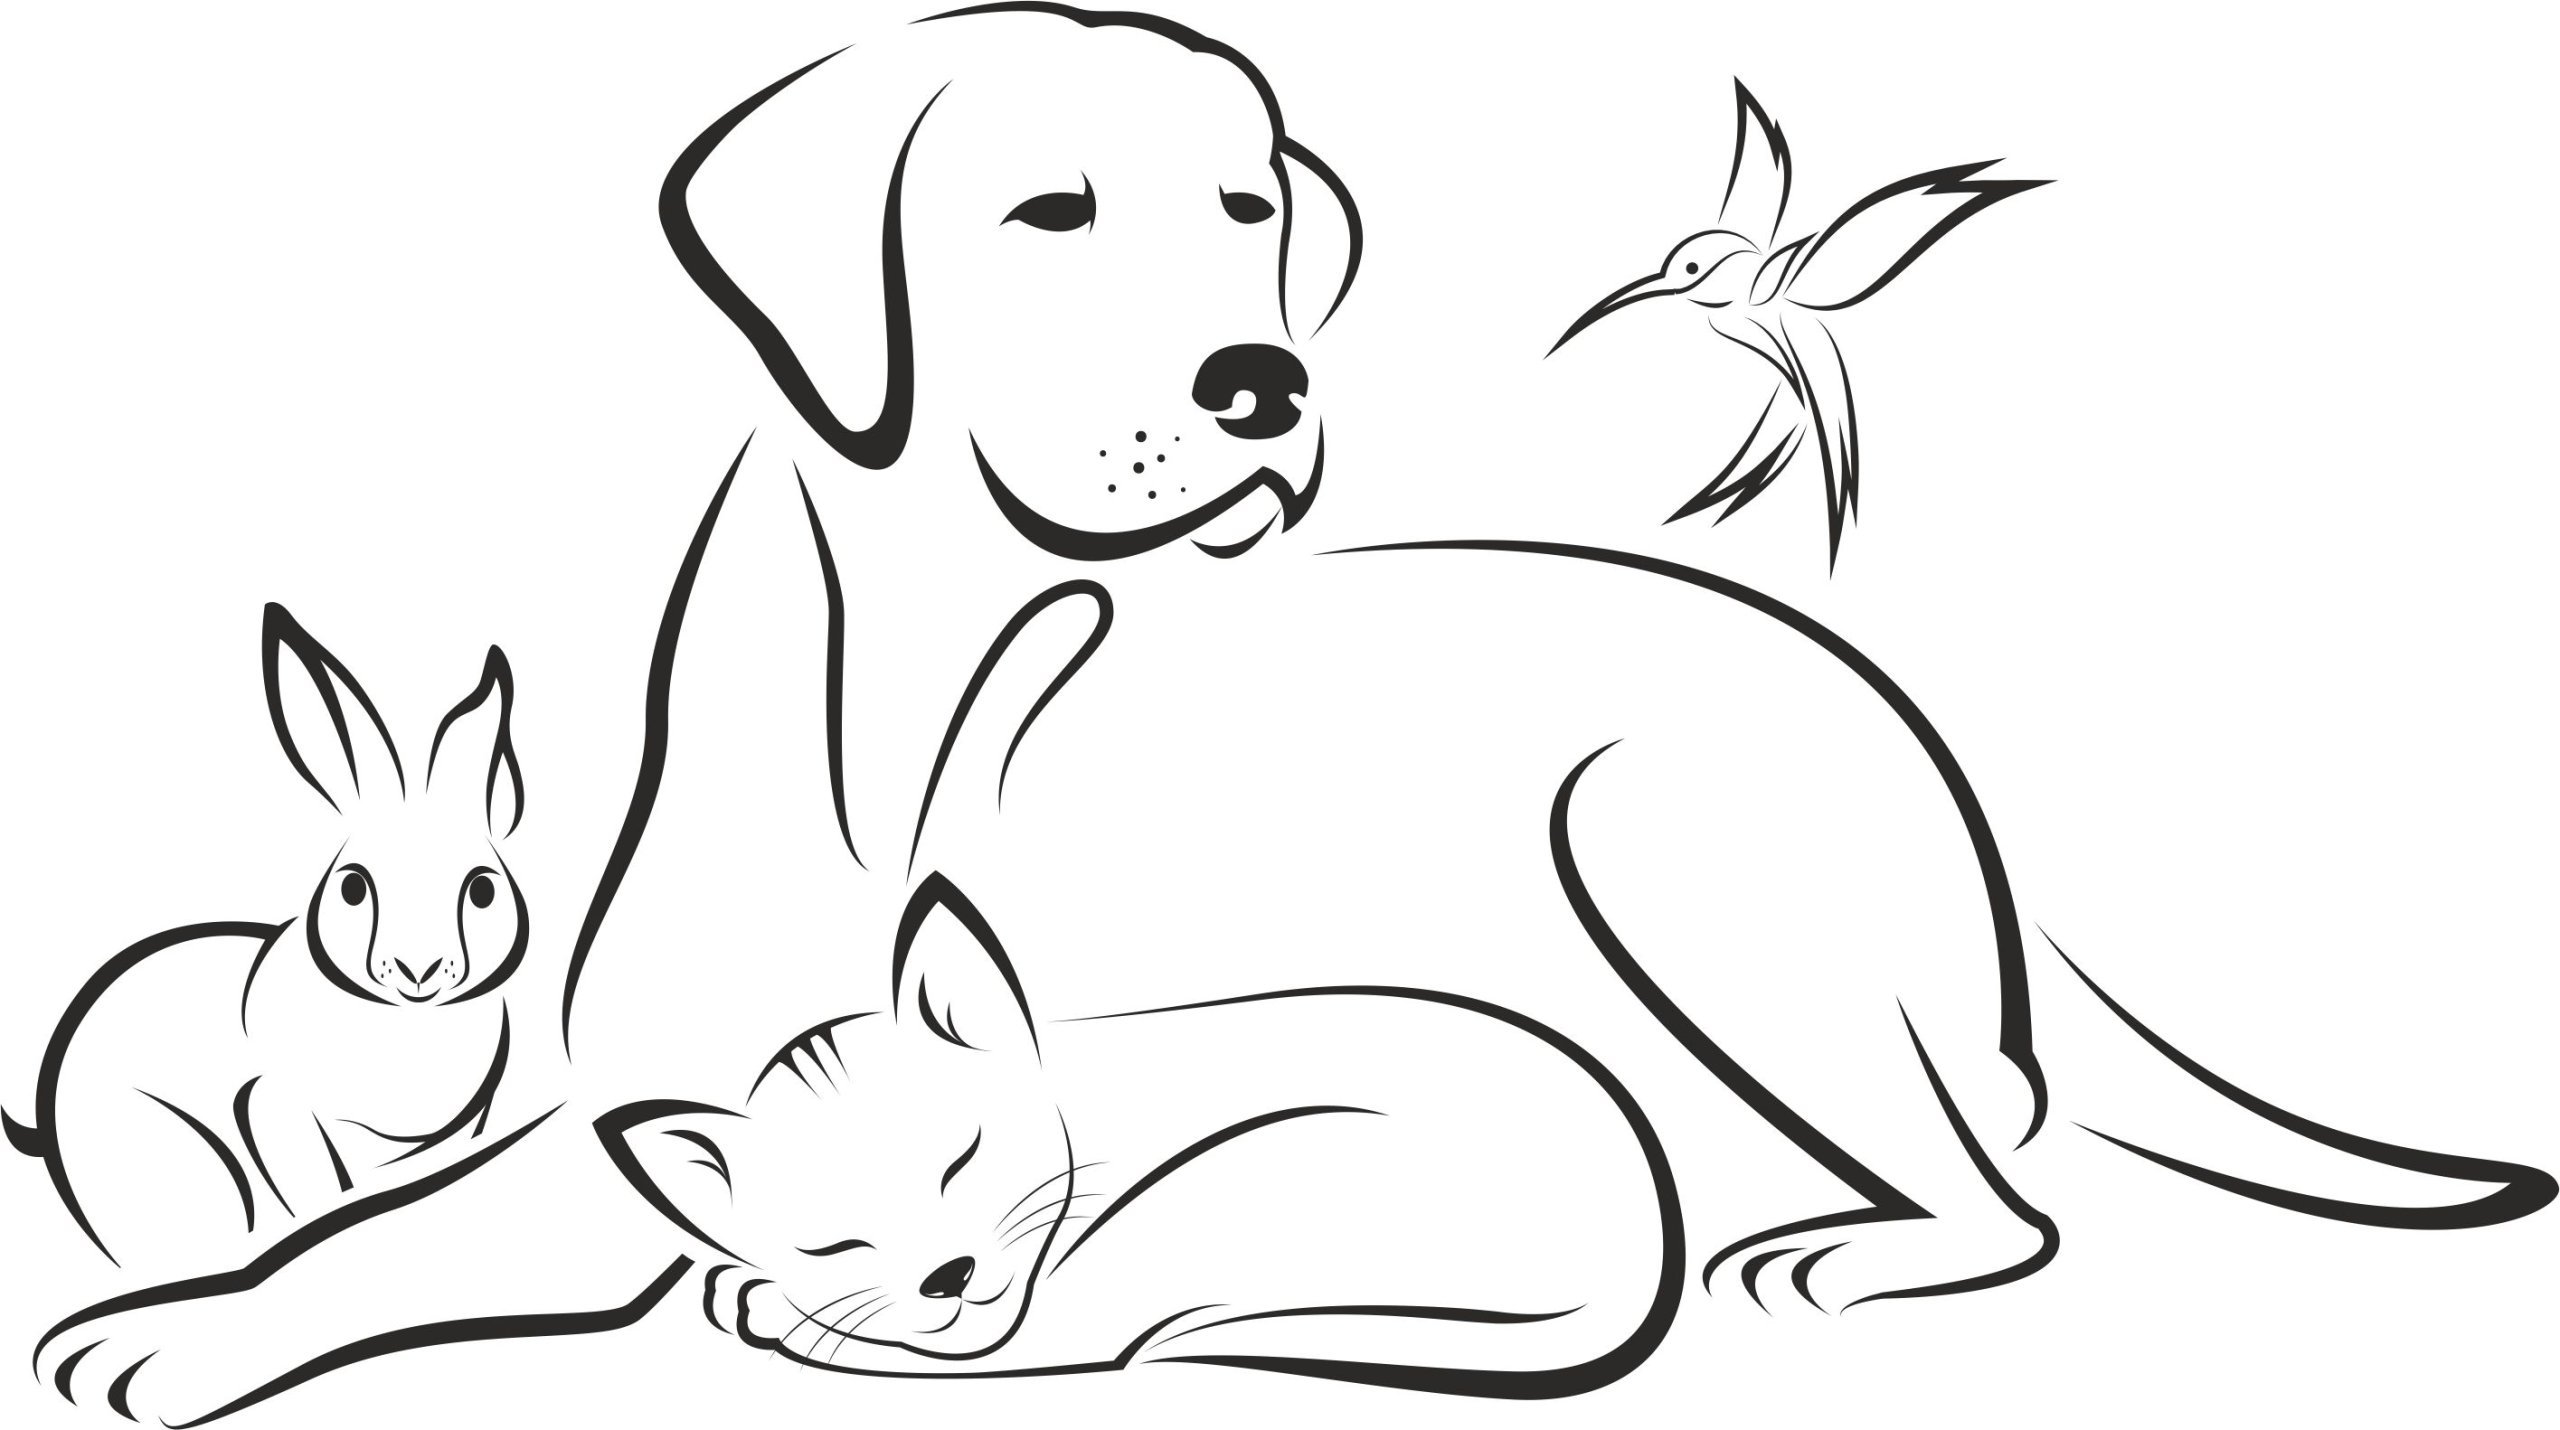 Рисунок кота и собаки вместе